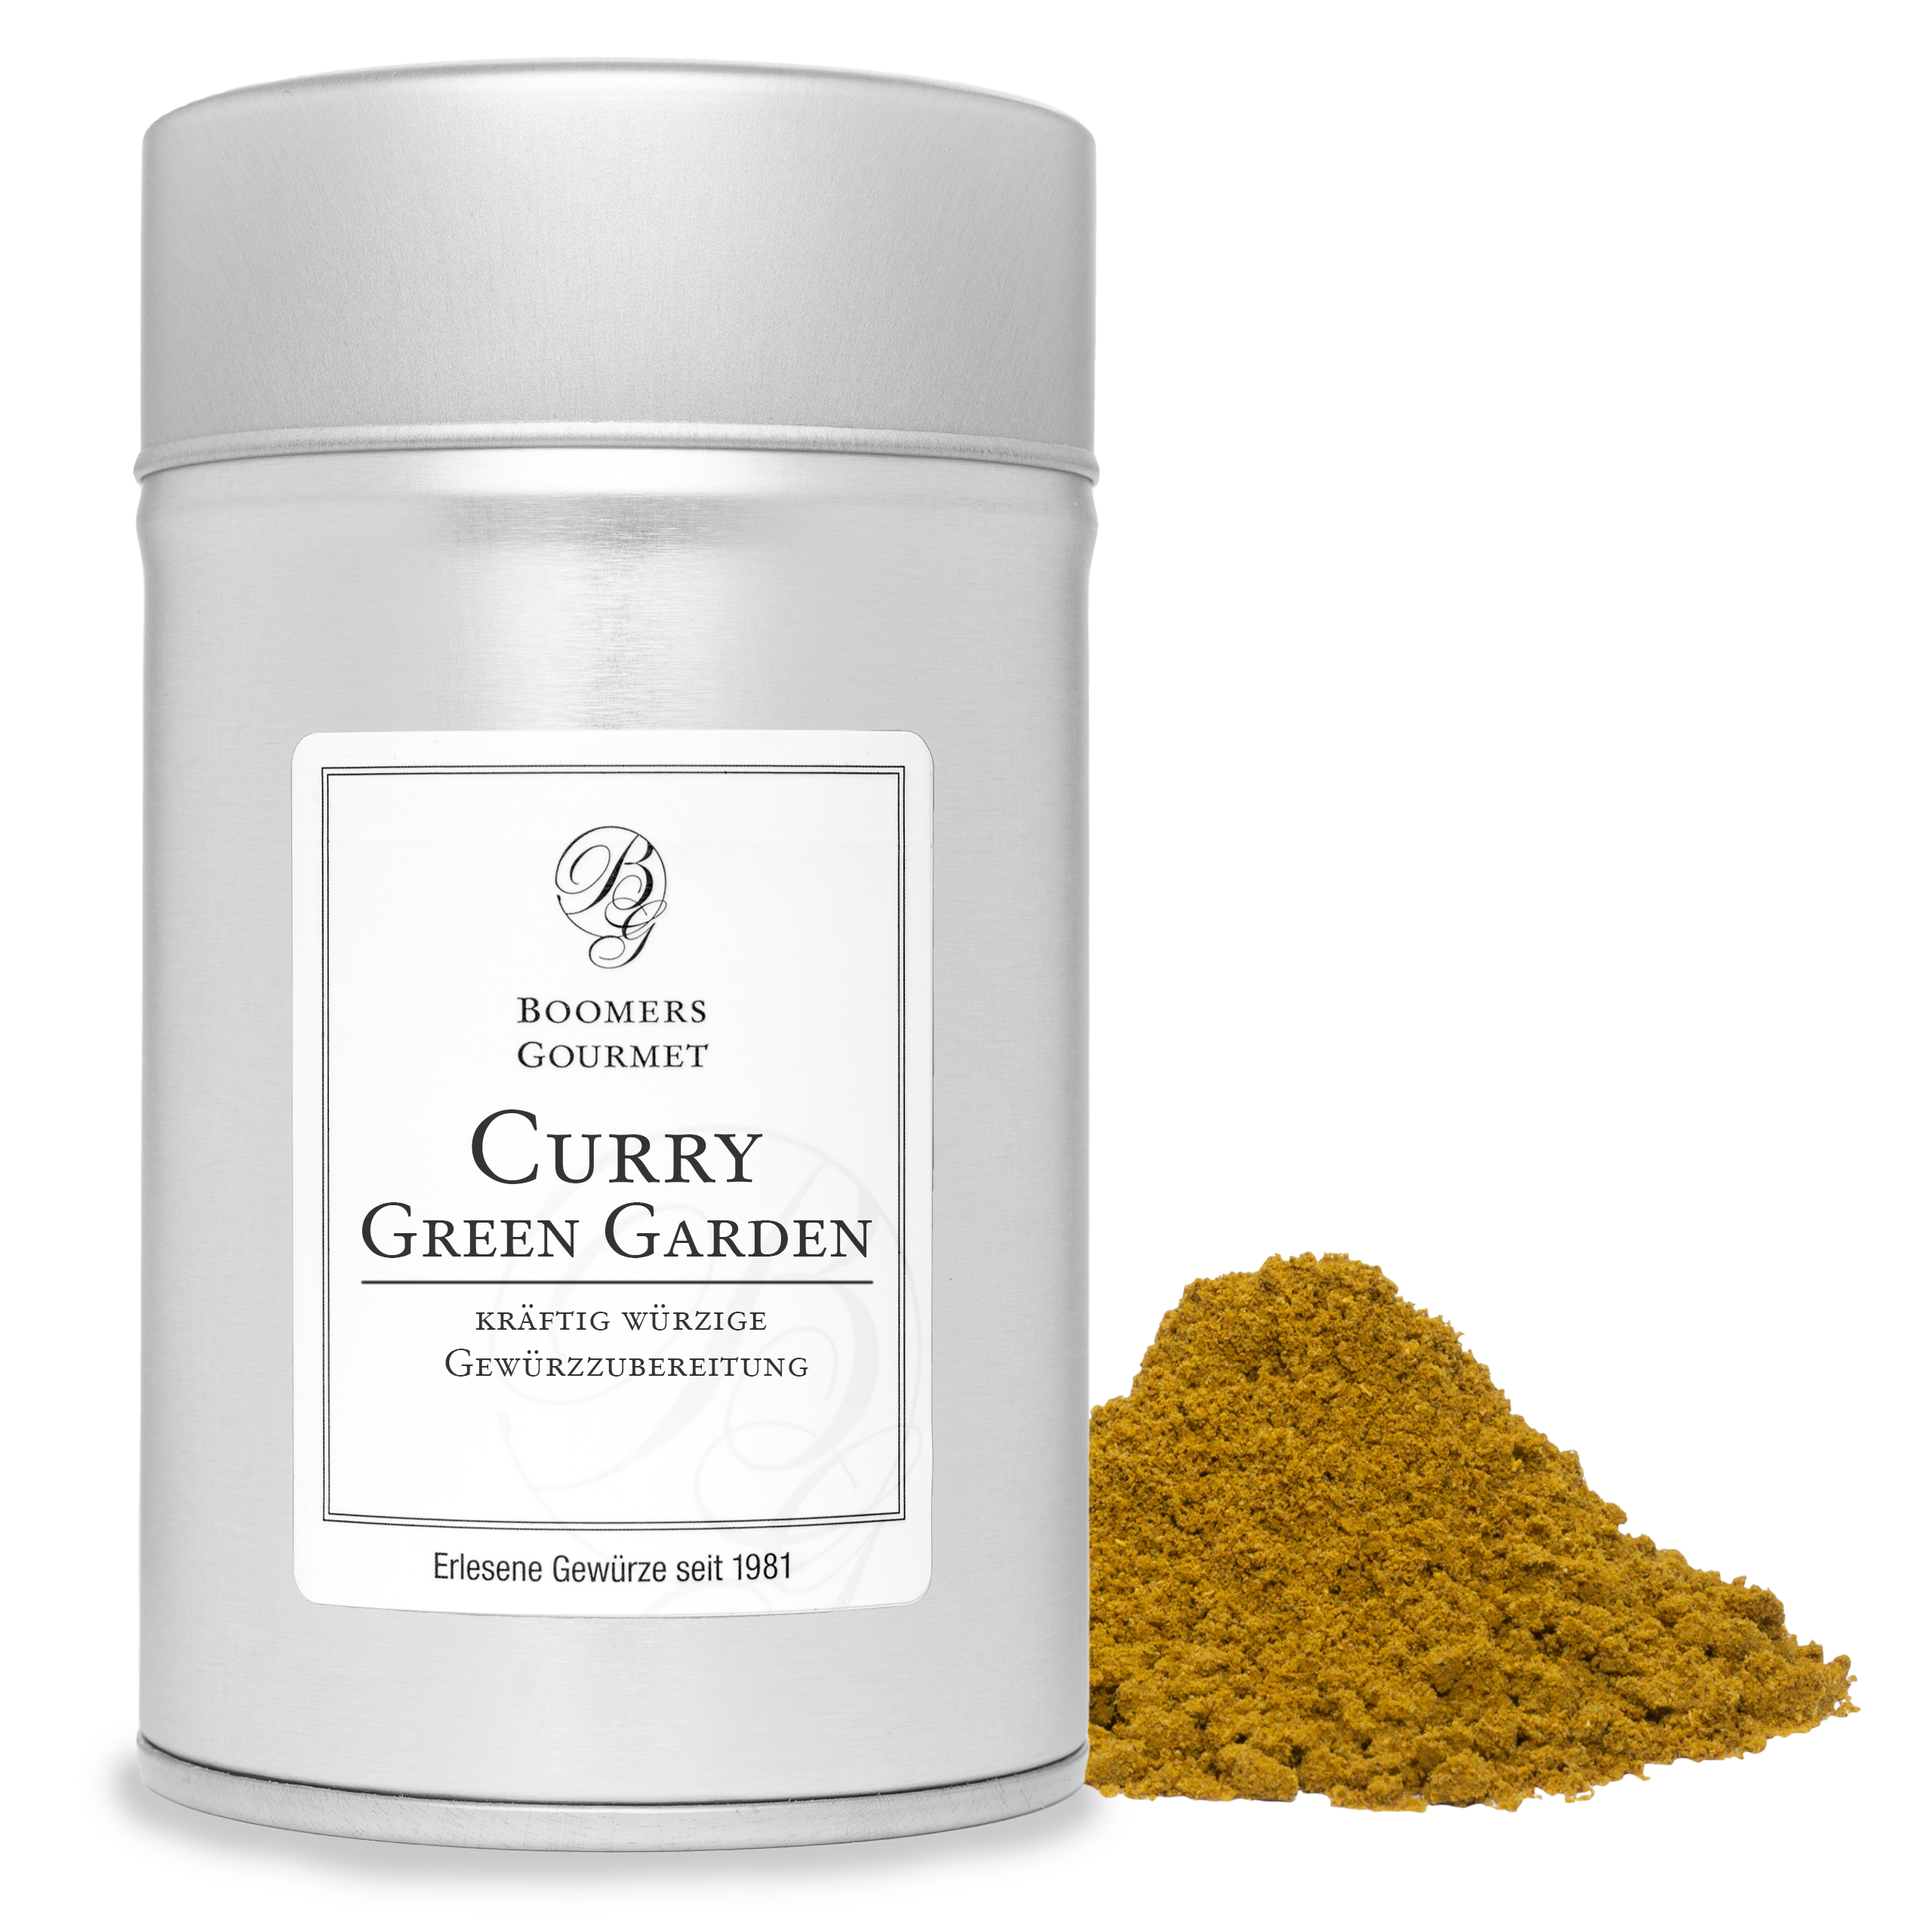 Curry Green Garden, kräftig würzige Gewürzzubereitung